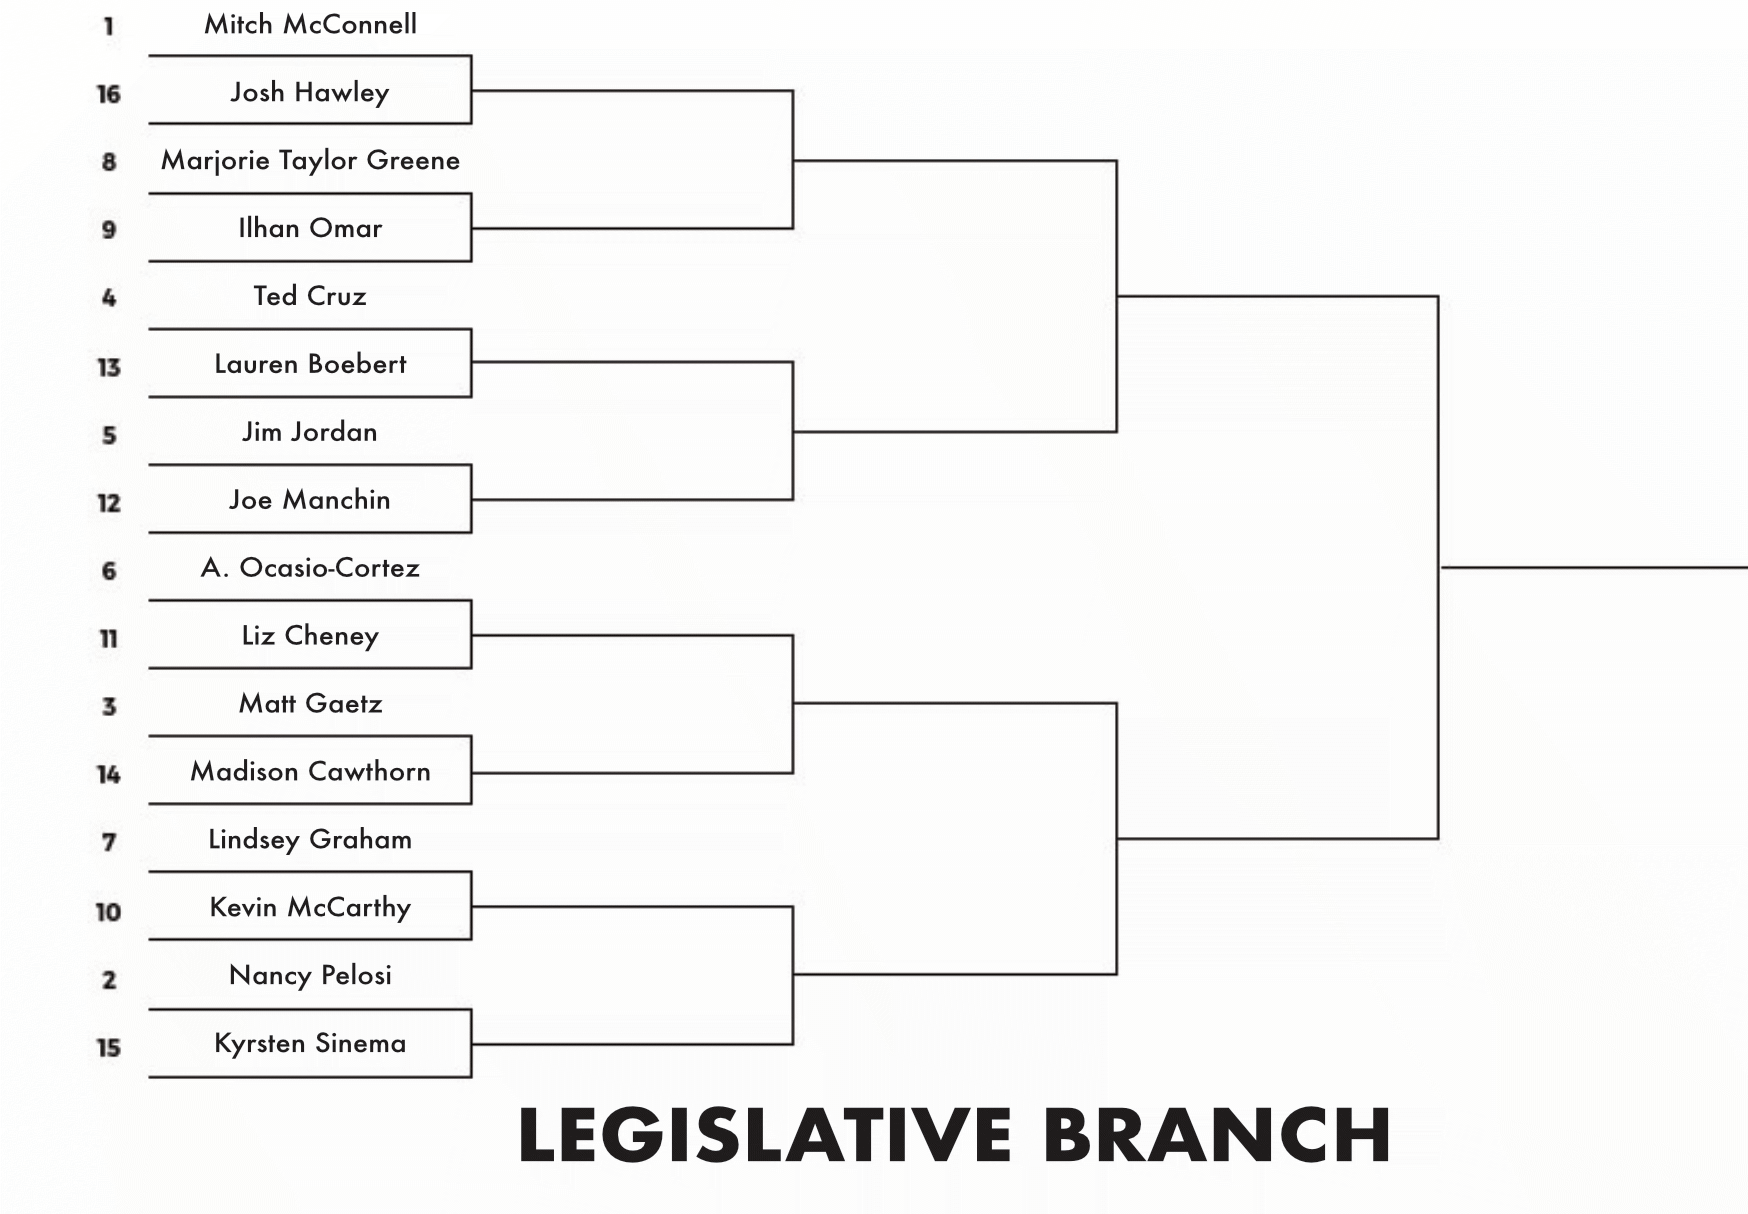 #1 Senate Minority Leader
Mitch McConnell (R-KY) vs. #16 Sen. Josh Hawley (R-MO); #2 Speaker of the House Nancy Pelosi (D-CA) vs. #15 Sen. Kyrsten
Sinema (D-AZ); #3 Rep. Matt Gaetz (R-FL) vs. #14 Rep. Madison Cawthorn (R-NC); #4 Sen. Ted Cruz (R-TX) vs. #13 Rep.
Lauren Boebert (R-CO); #5 Rep. Jim Jordan (R-OH) vs. #12 Sen. Joe Manchin (D-WV); #6 Rep. Alexandria Ocasio Cortez
(D-NY) vs. #11 Rep. Liz Cheney (R-WY); #7 Sen. Lindsey Graham (R-SC) vs. #10 House Minority Leader Kevin McCarthy
(R-CA); #8 Rep. Marjorie Taylor Greene (R-GA) vs. #9 Rep. Ilhan Omar (DFL-MN)